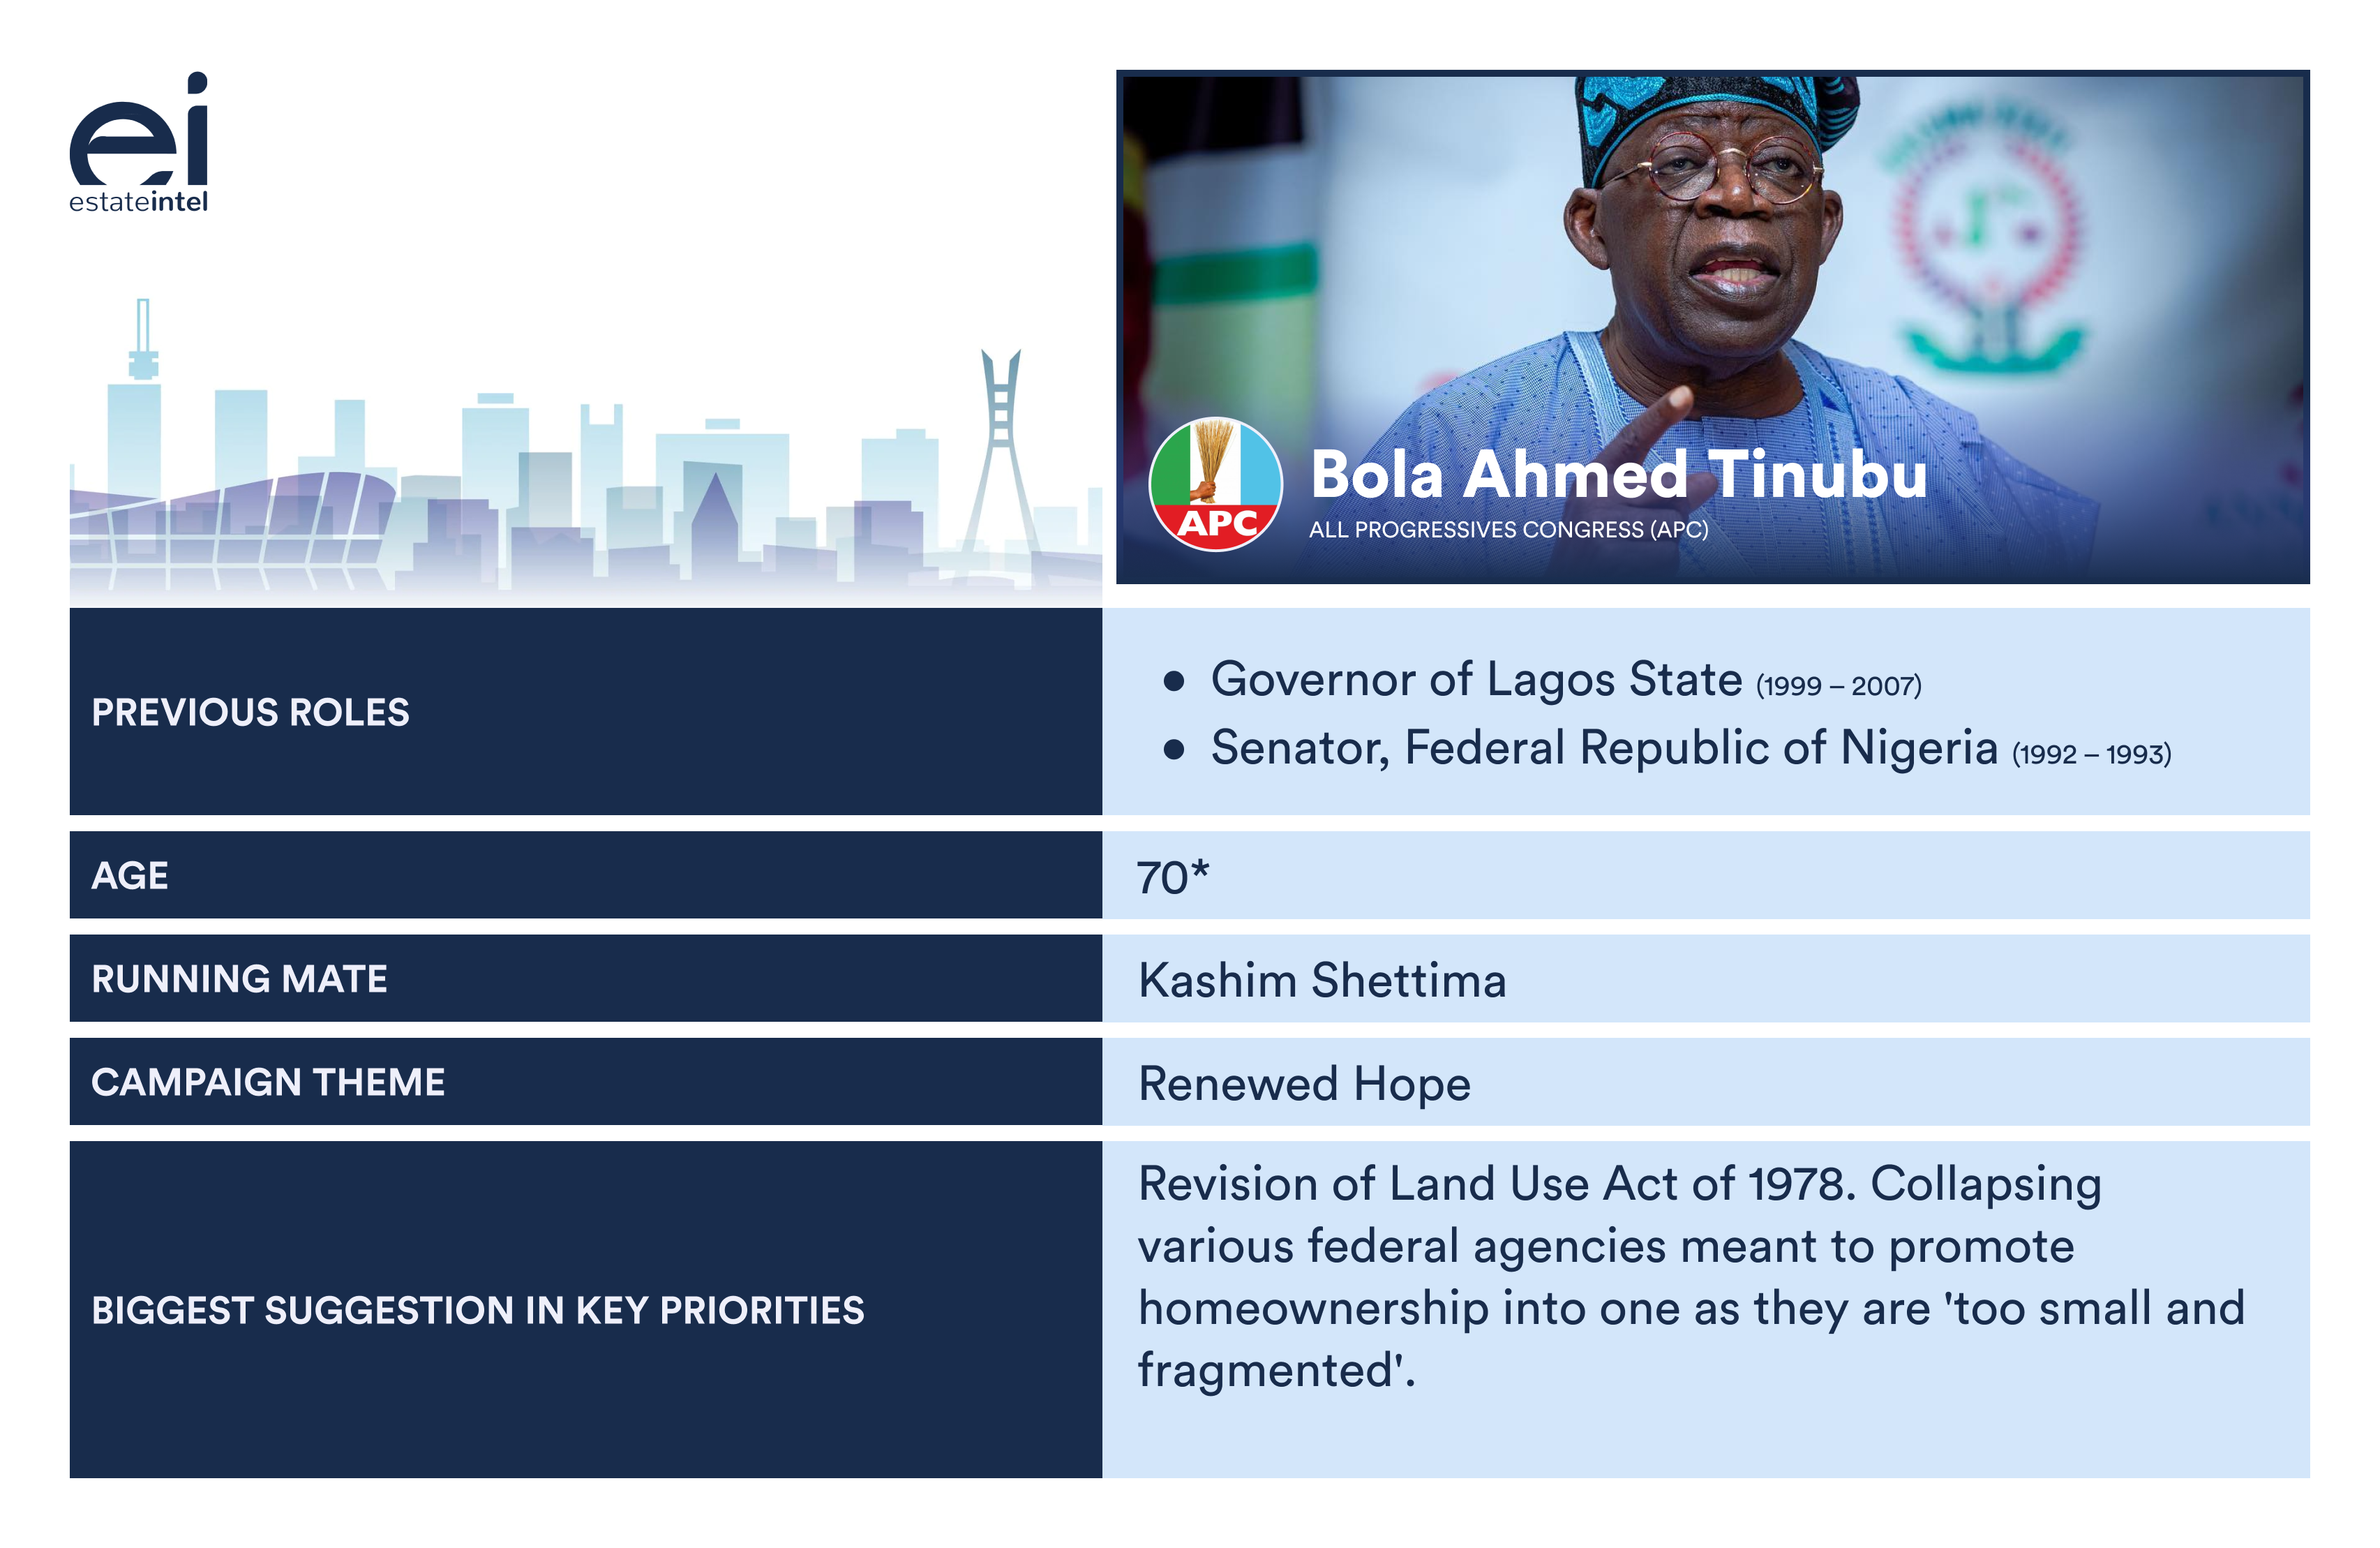 Atiku, Obi or Tinubu - Who is better for Nigerian Real Estate?